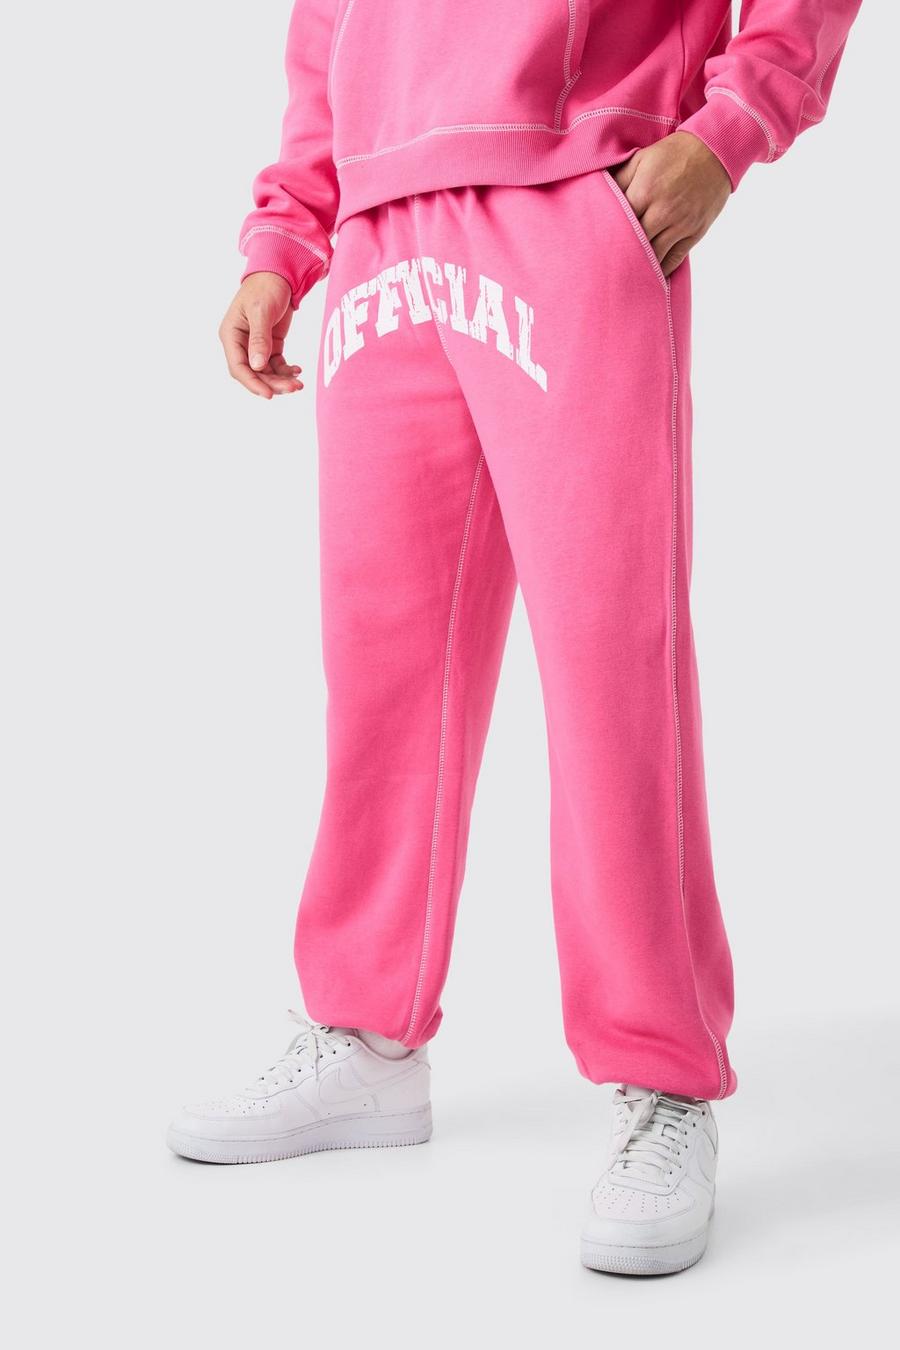 Pantaloni tuta oversize Official con cuciture a contrasto, Pink